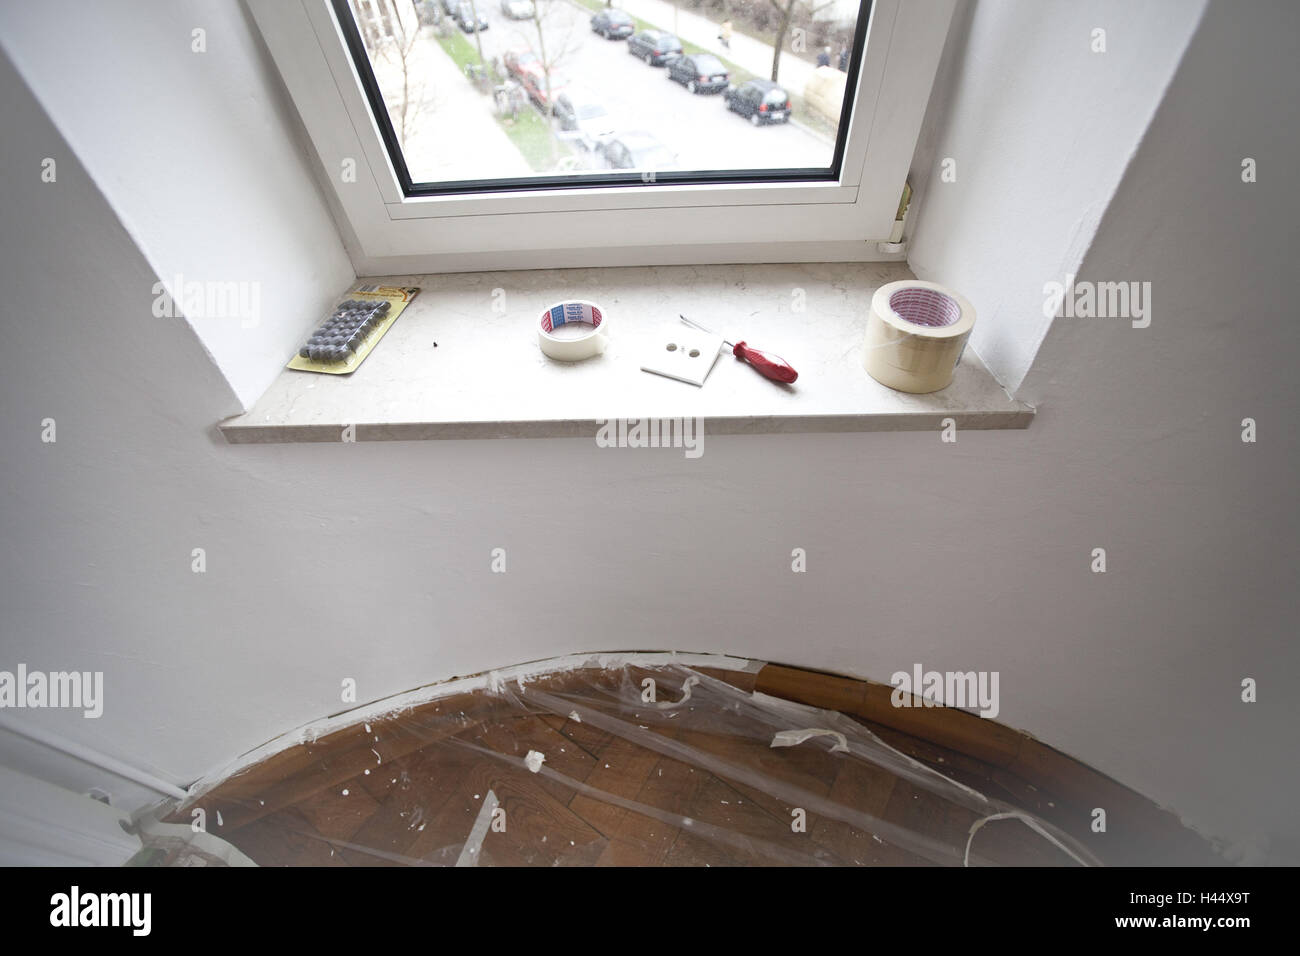 Painter's implements, adhesive tape, windowsill, floor, plastic cover, interior, Stock Photo